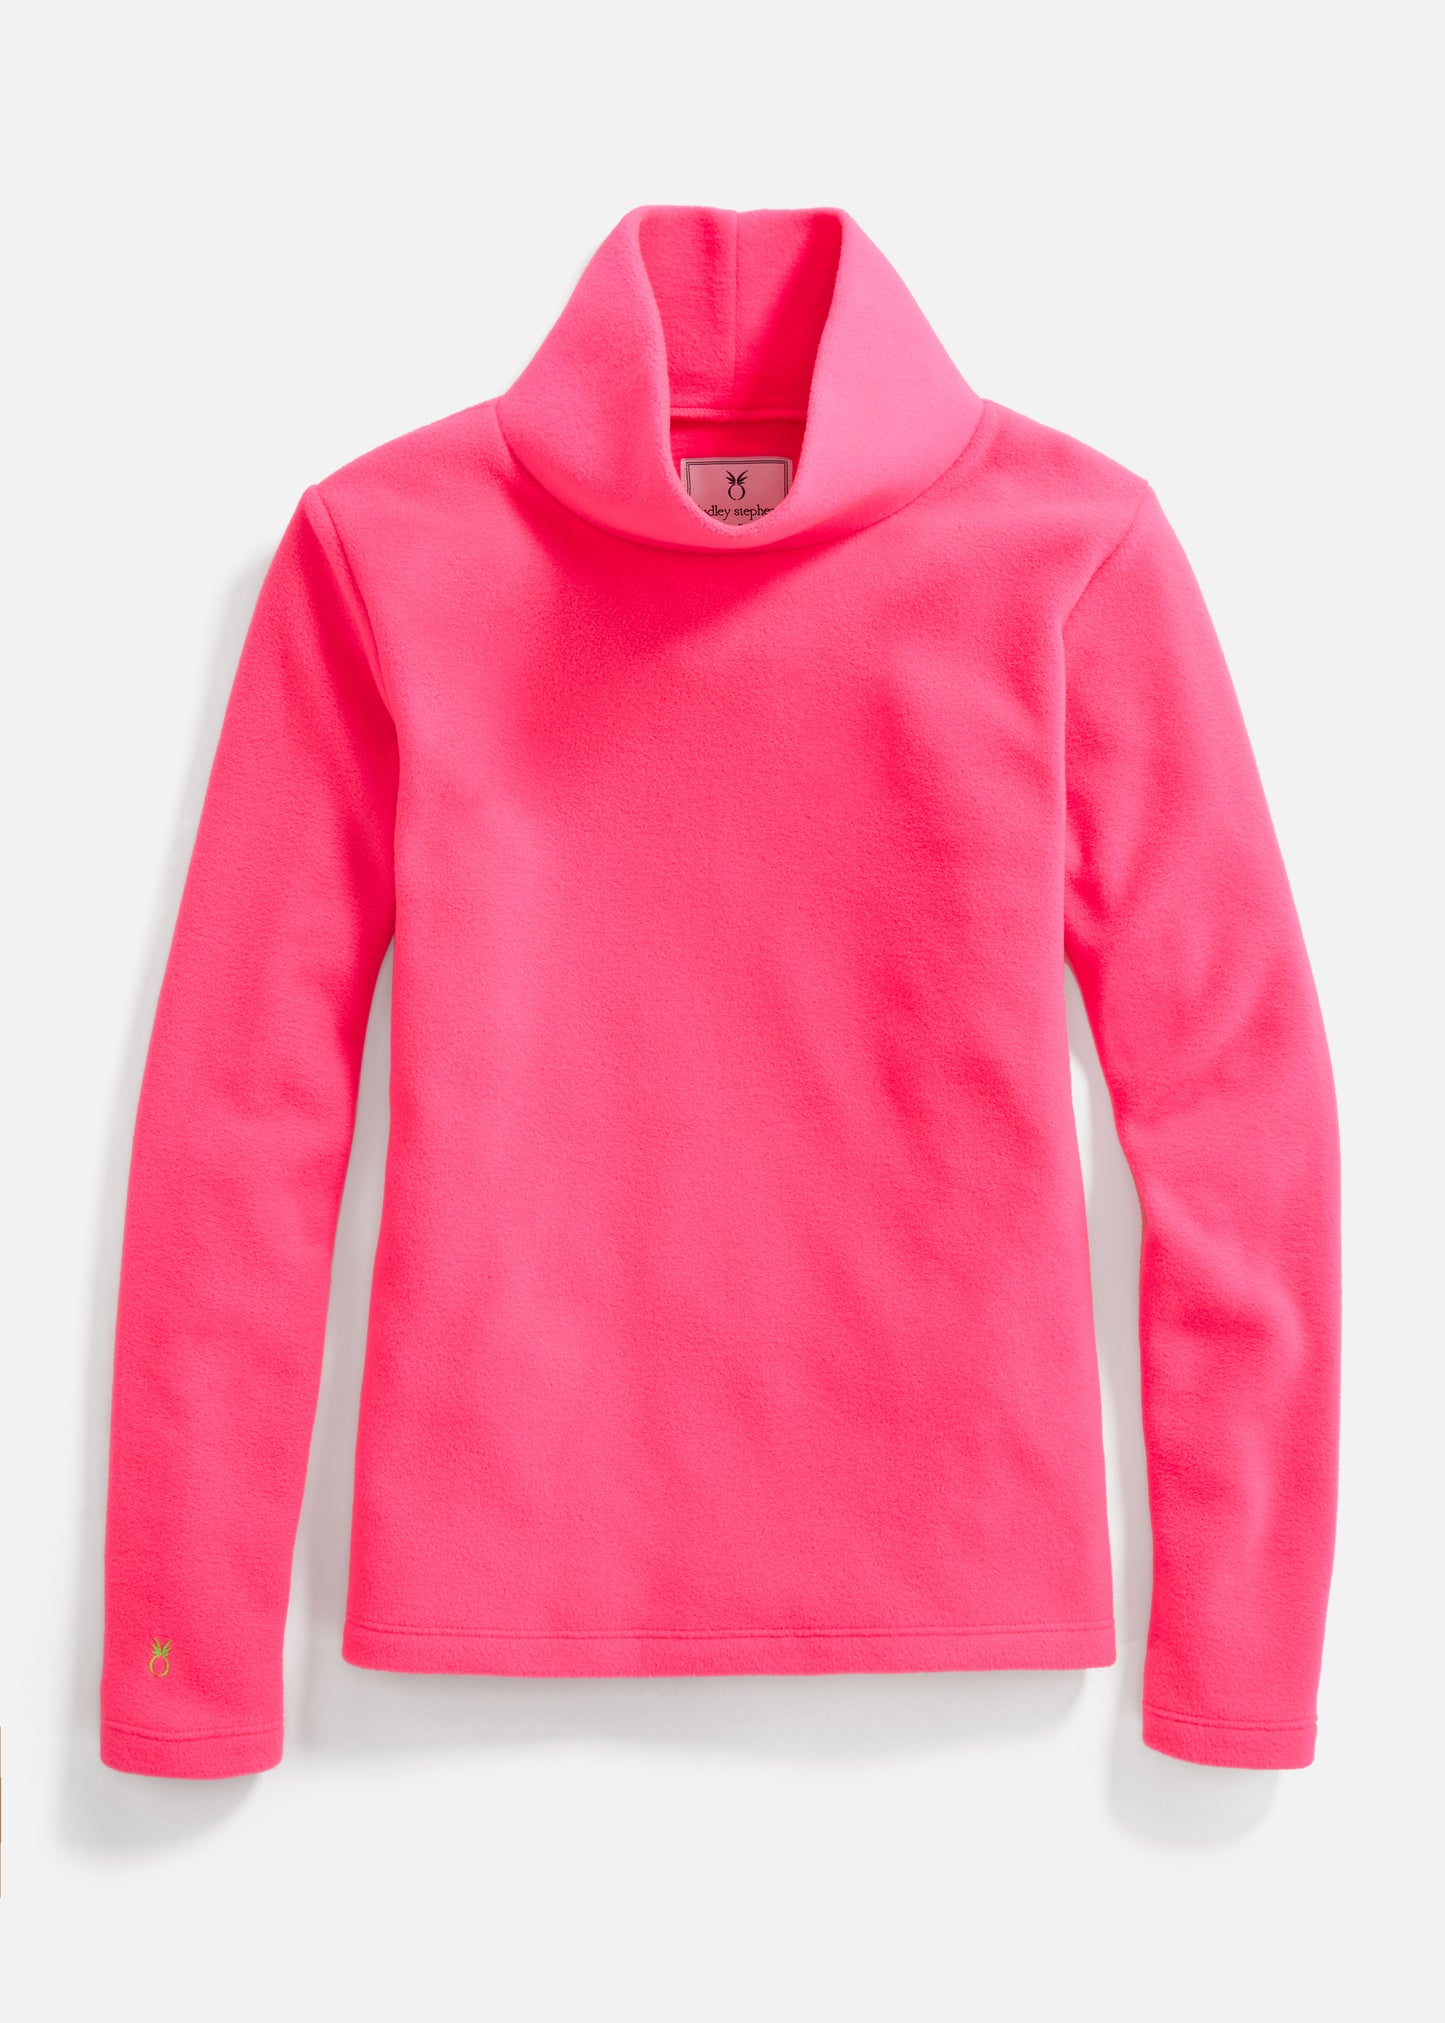 Greenpoint Turtleneck in Vello Fleece (Neon Pink)